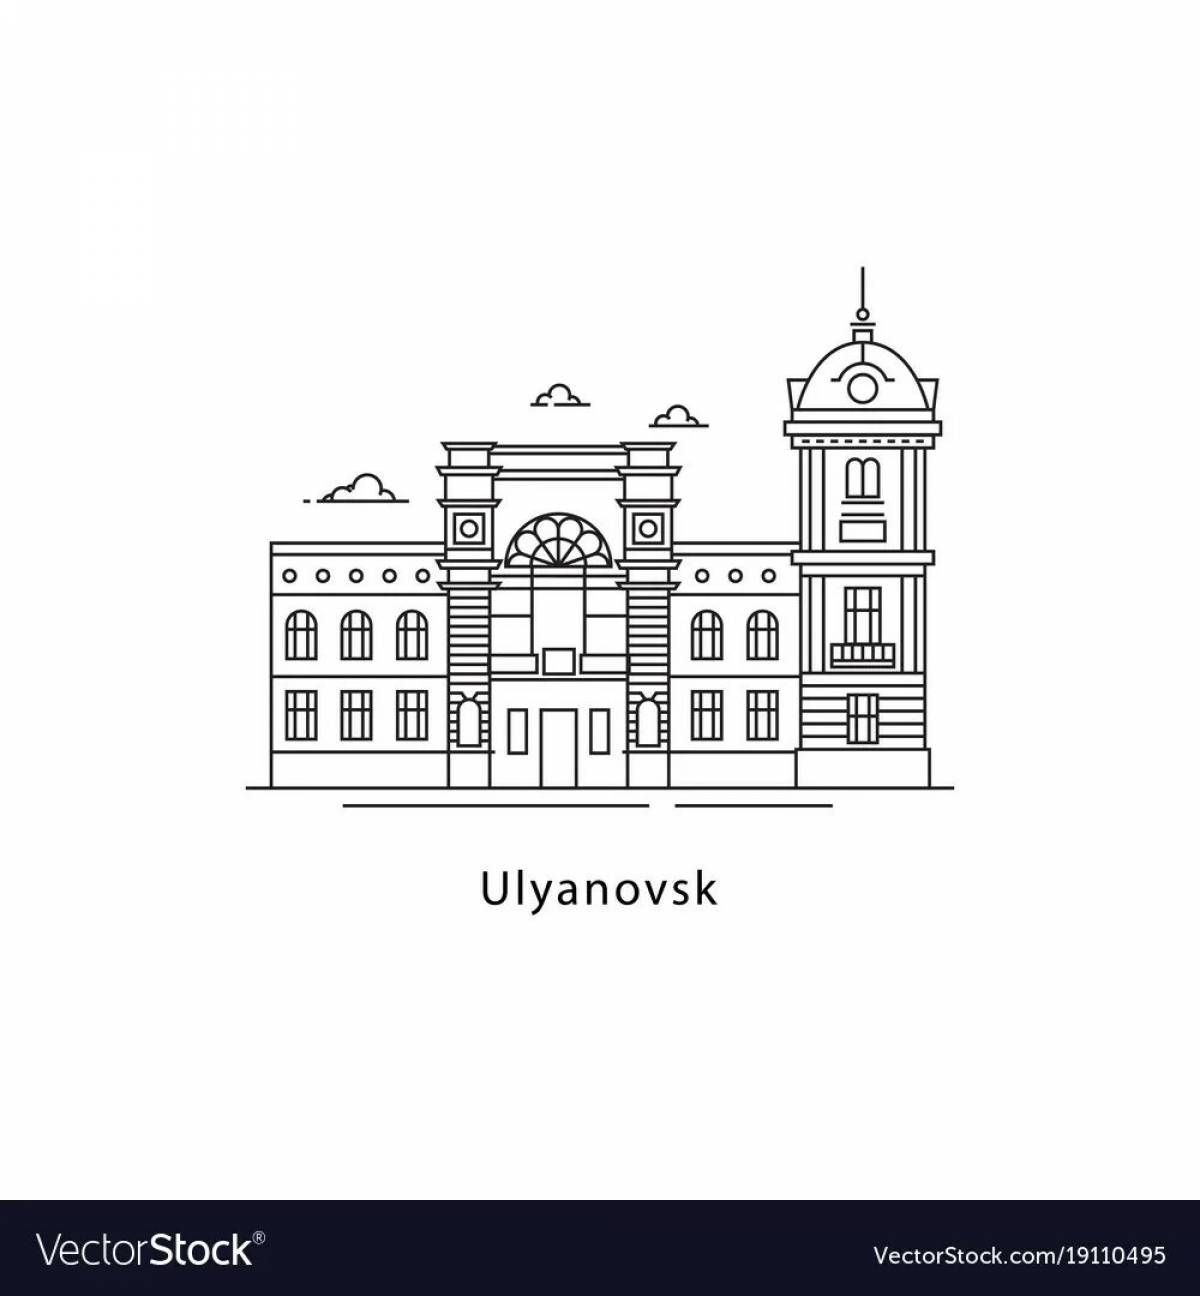 Ulyanovsk for children #13